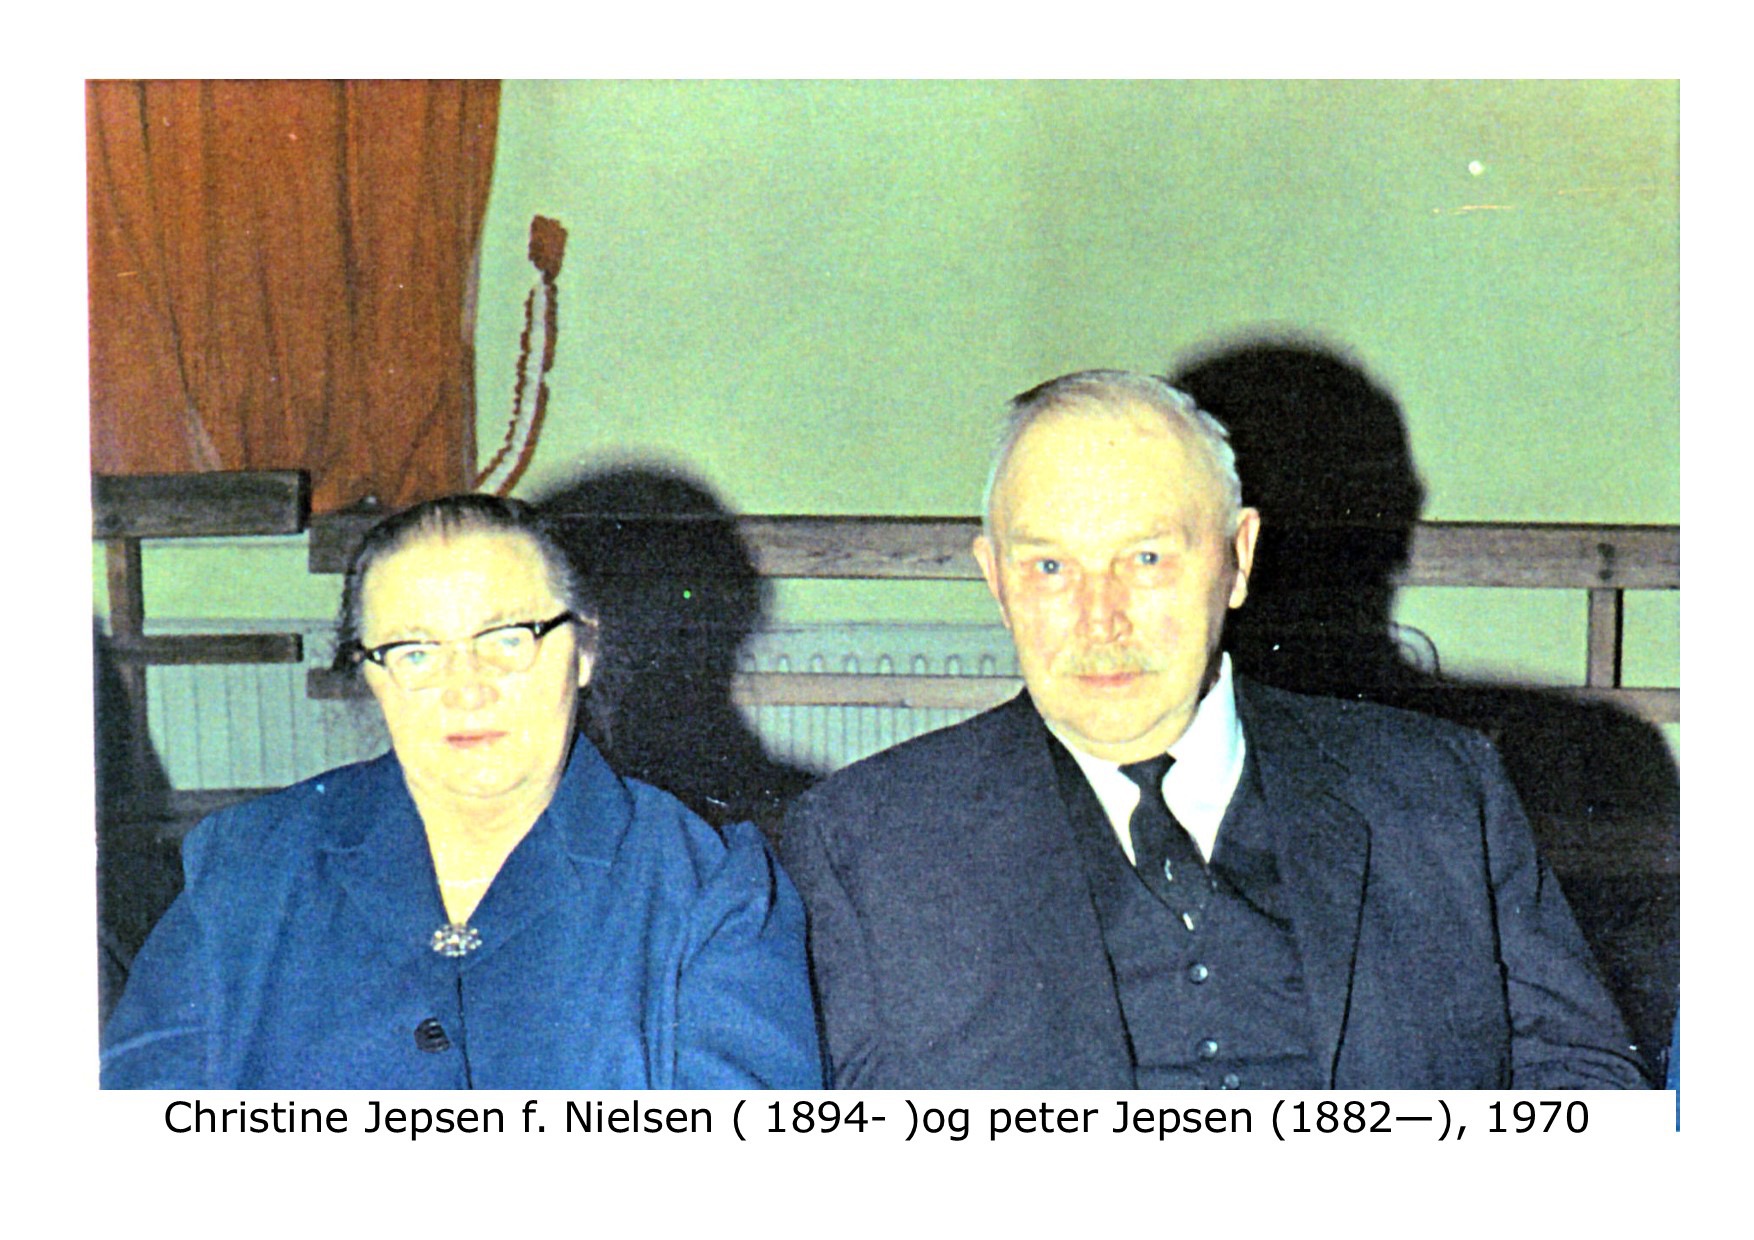 Christine &Peter Jepsen 1970 